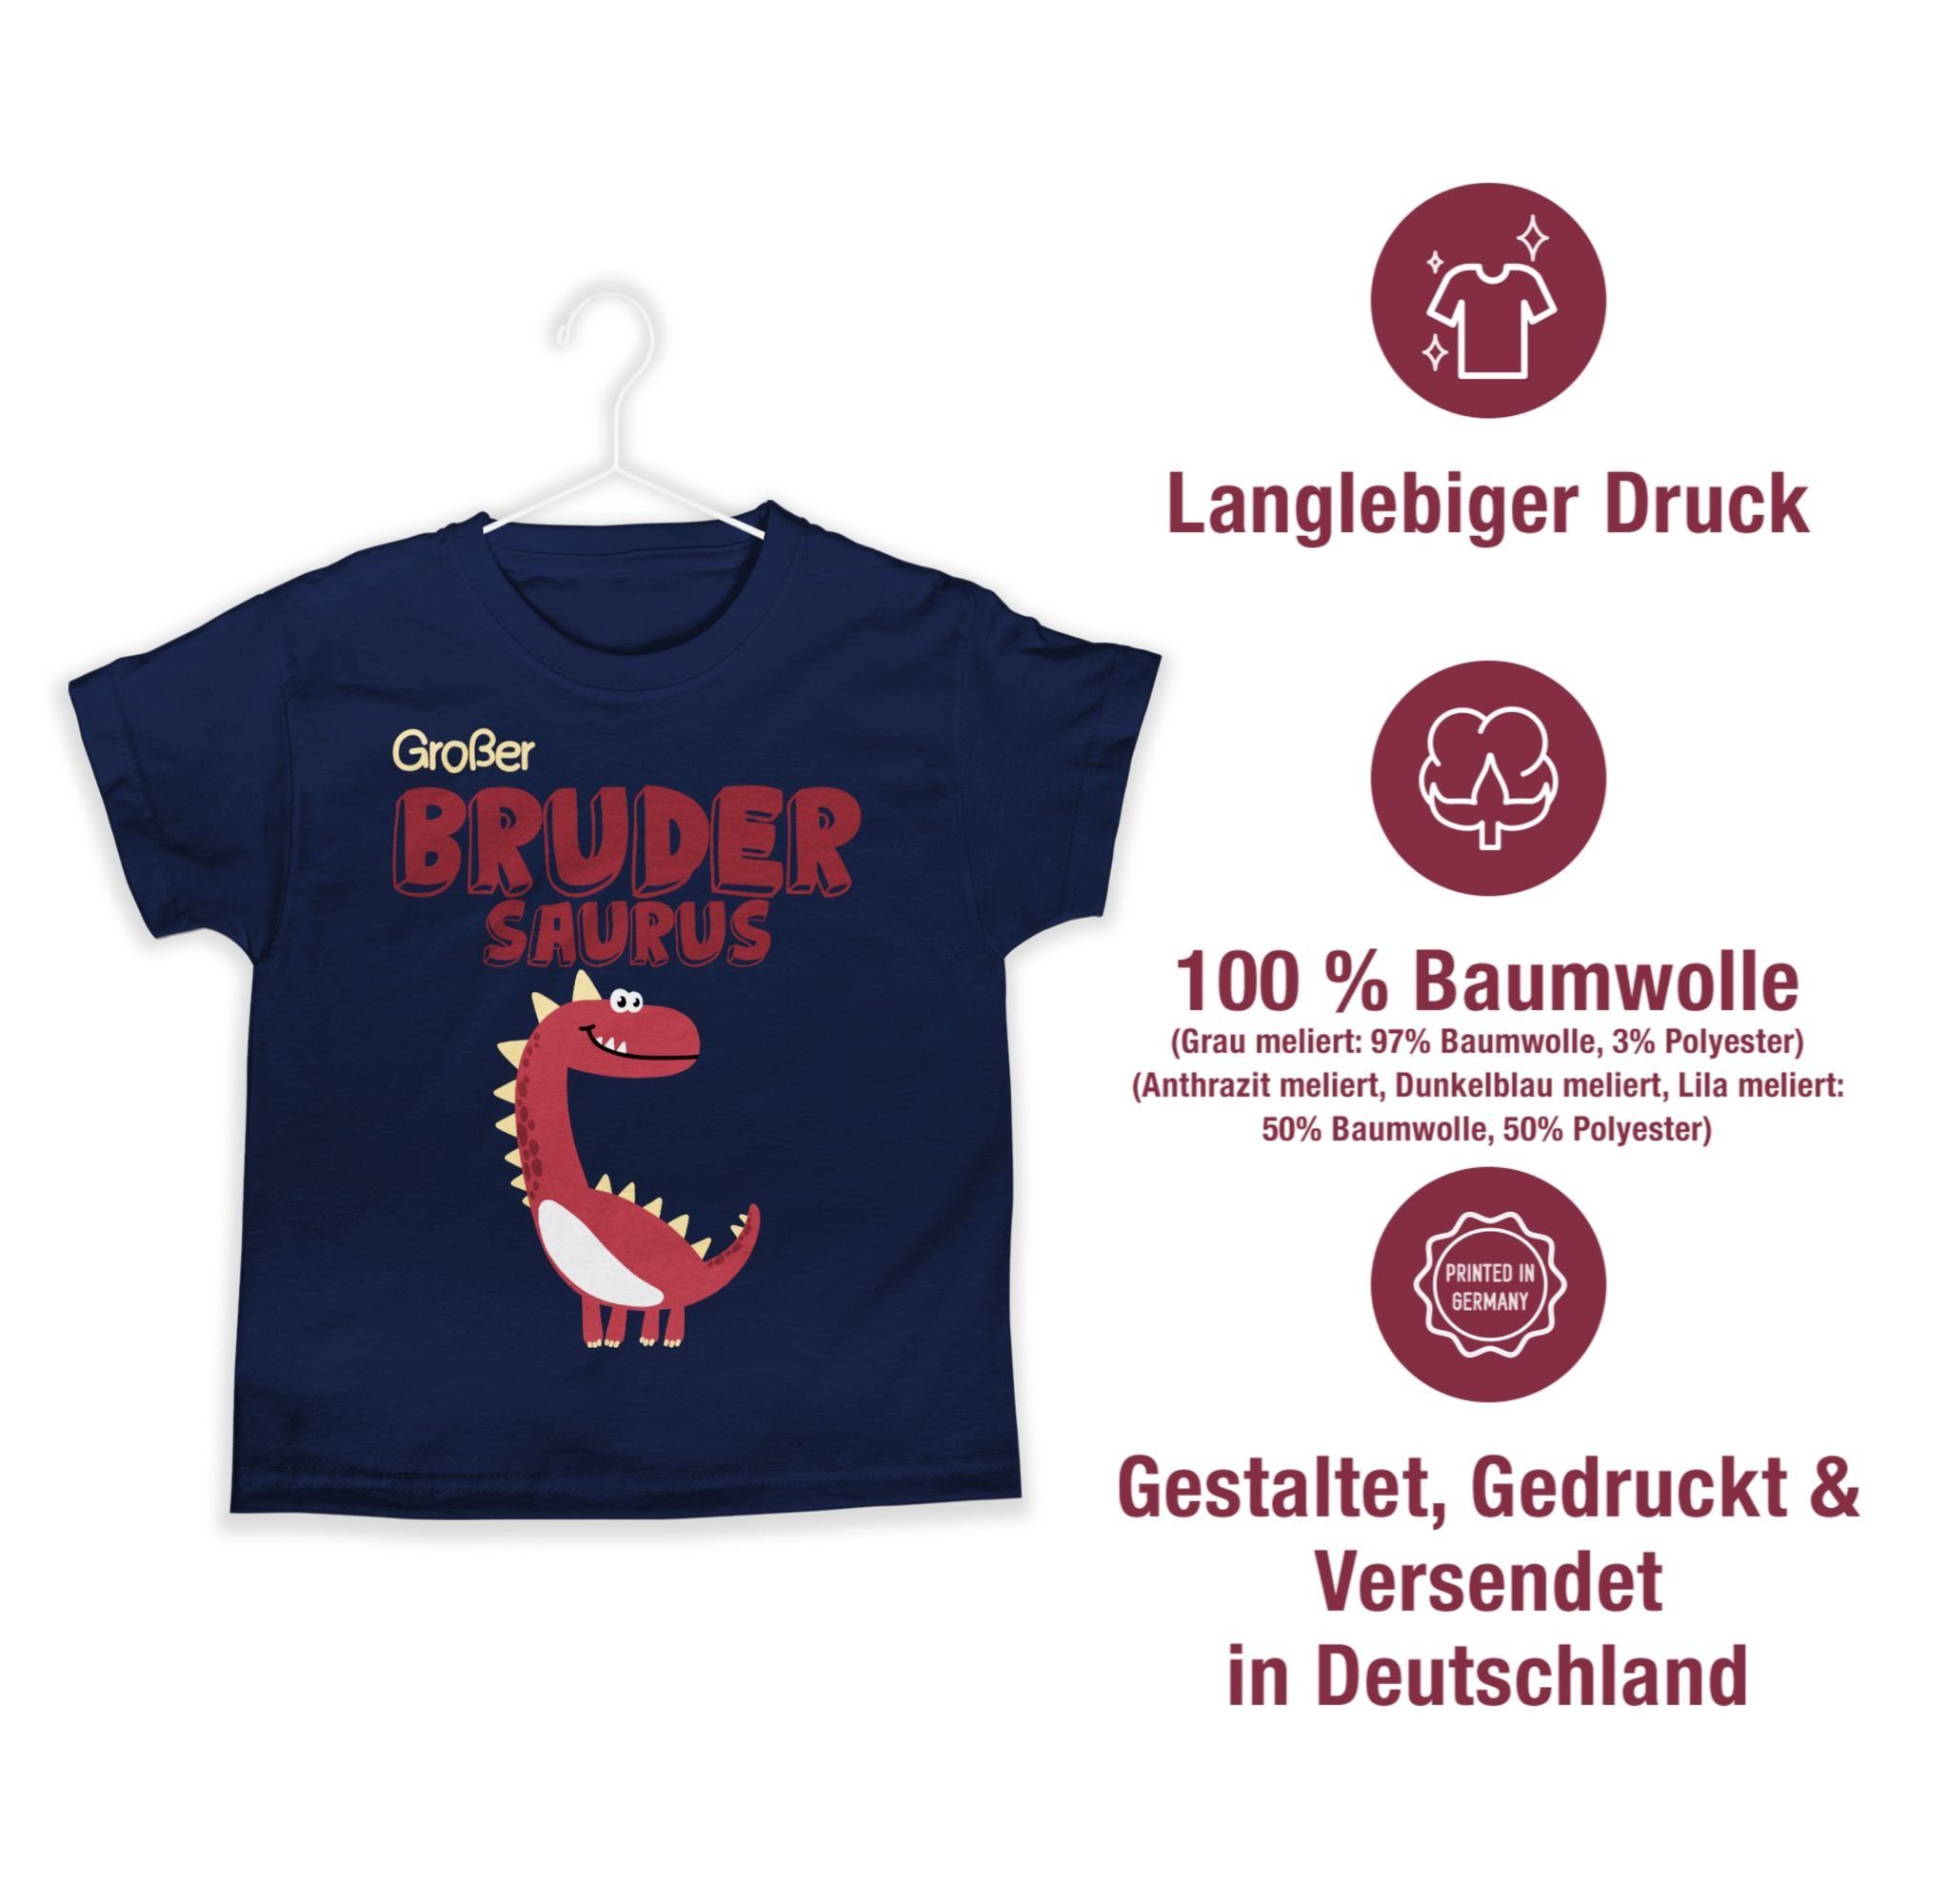 Brudersaurus Shirtracer Bruder T-Shirt 01 Großer Dunkelblau Großer